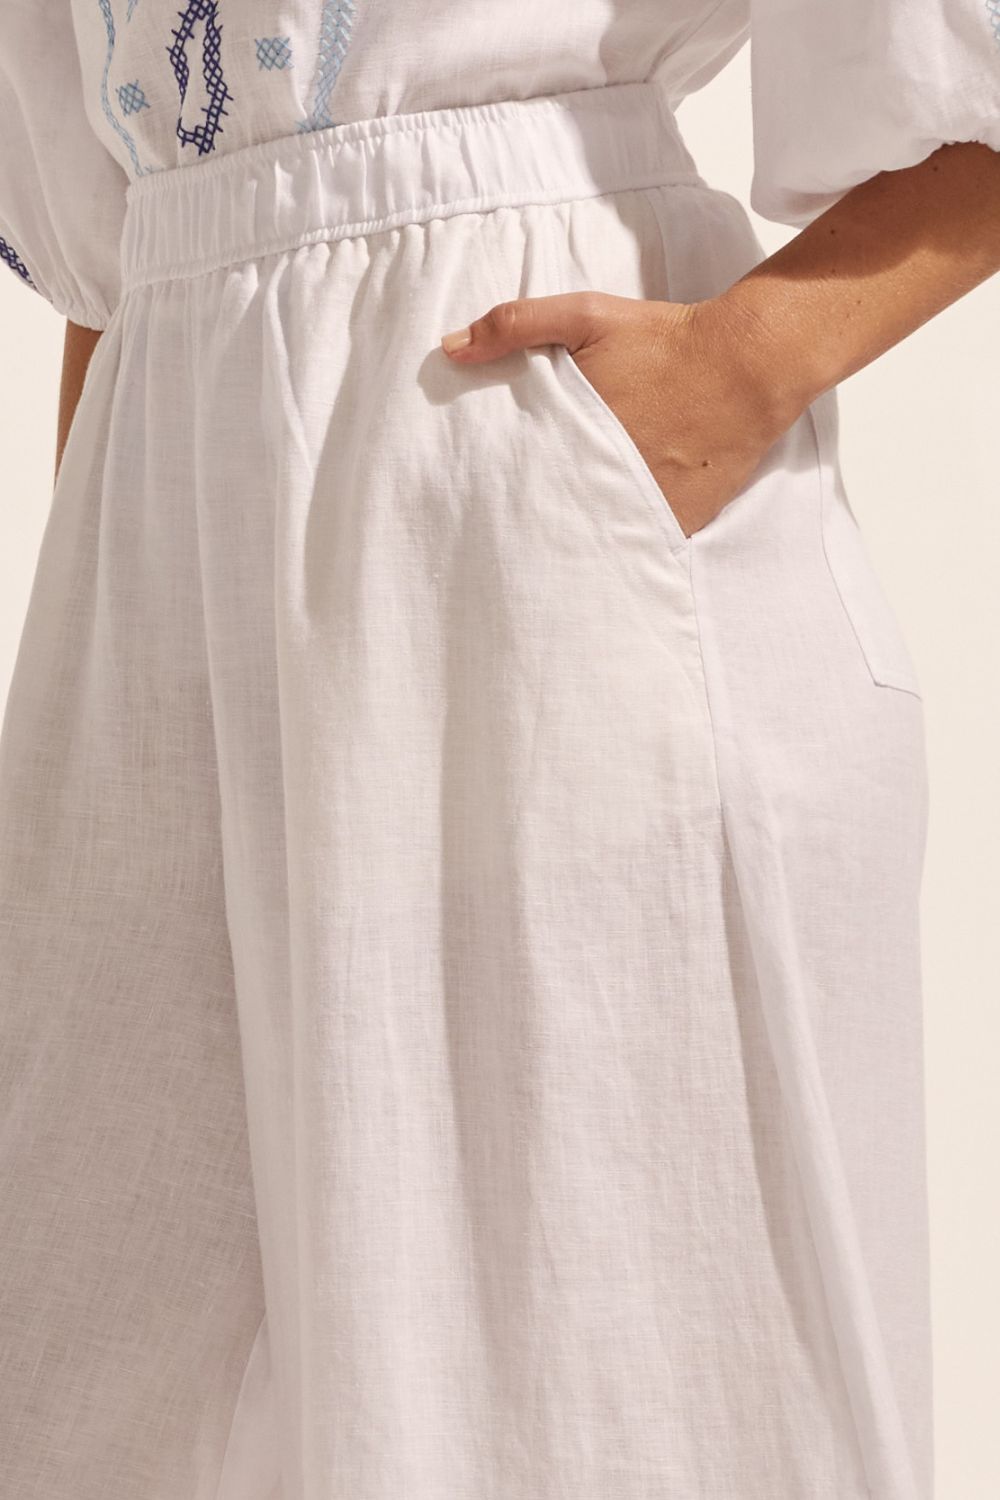 white, pants, elasticated waist, side pockets, wide leg, close up image